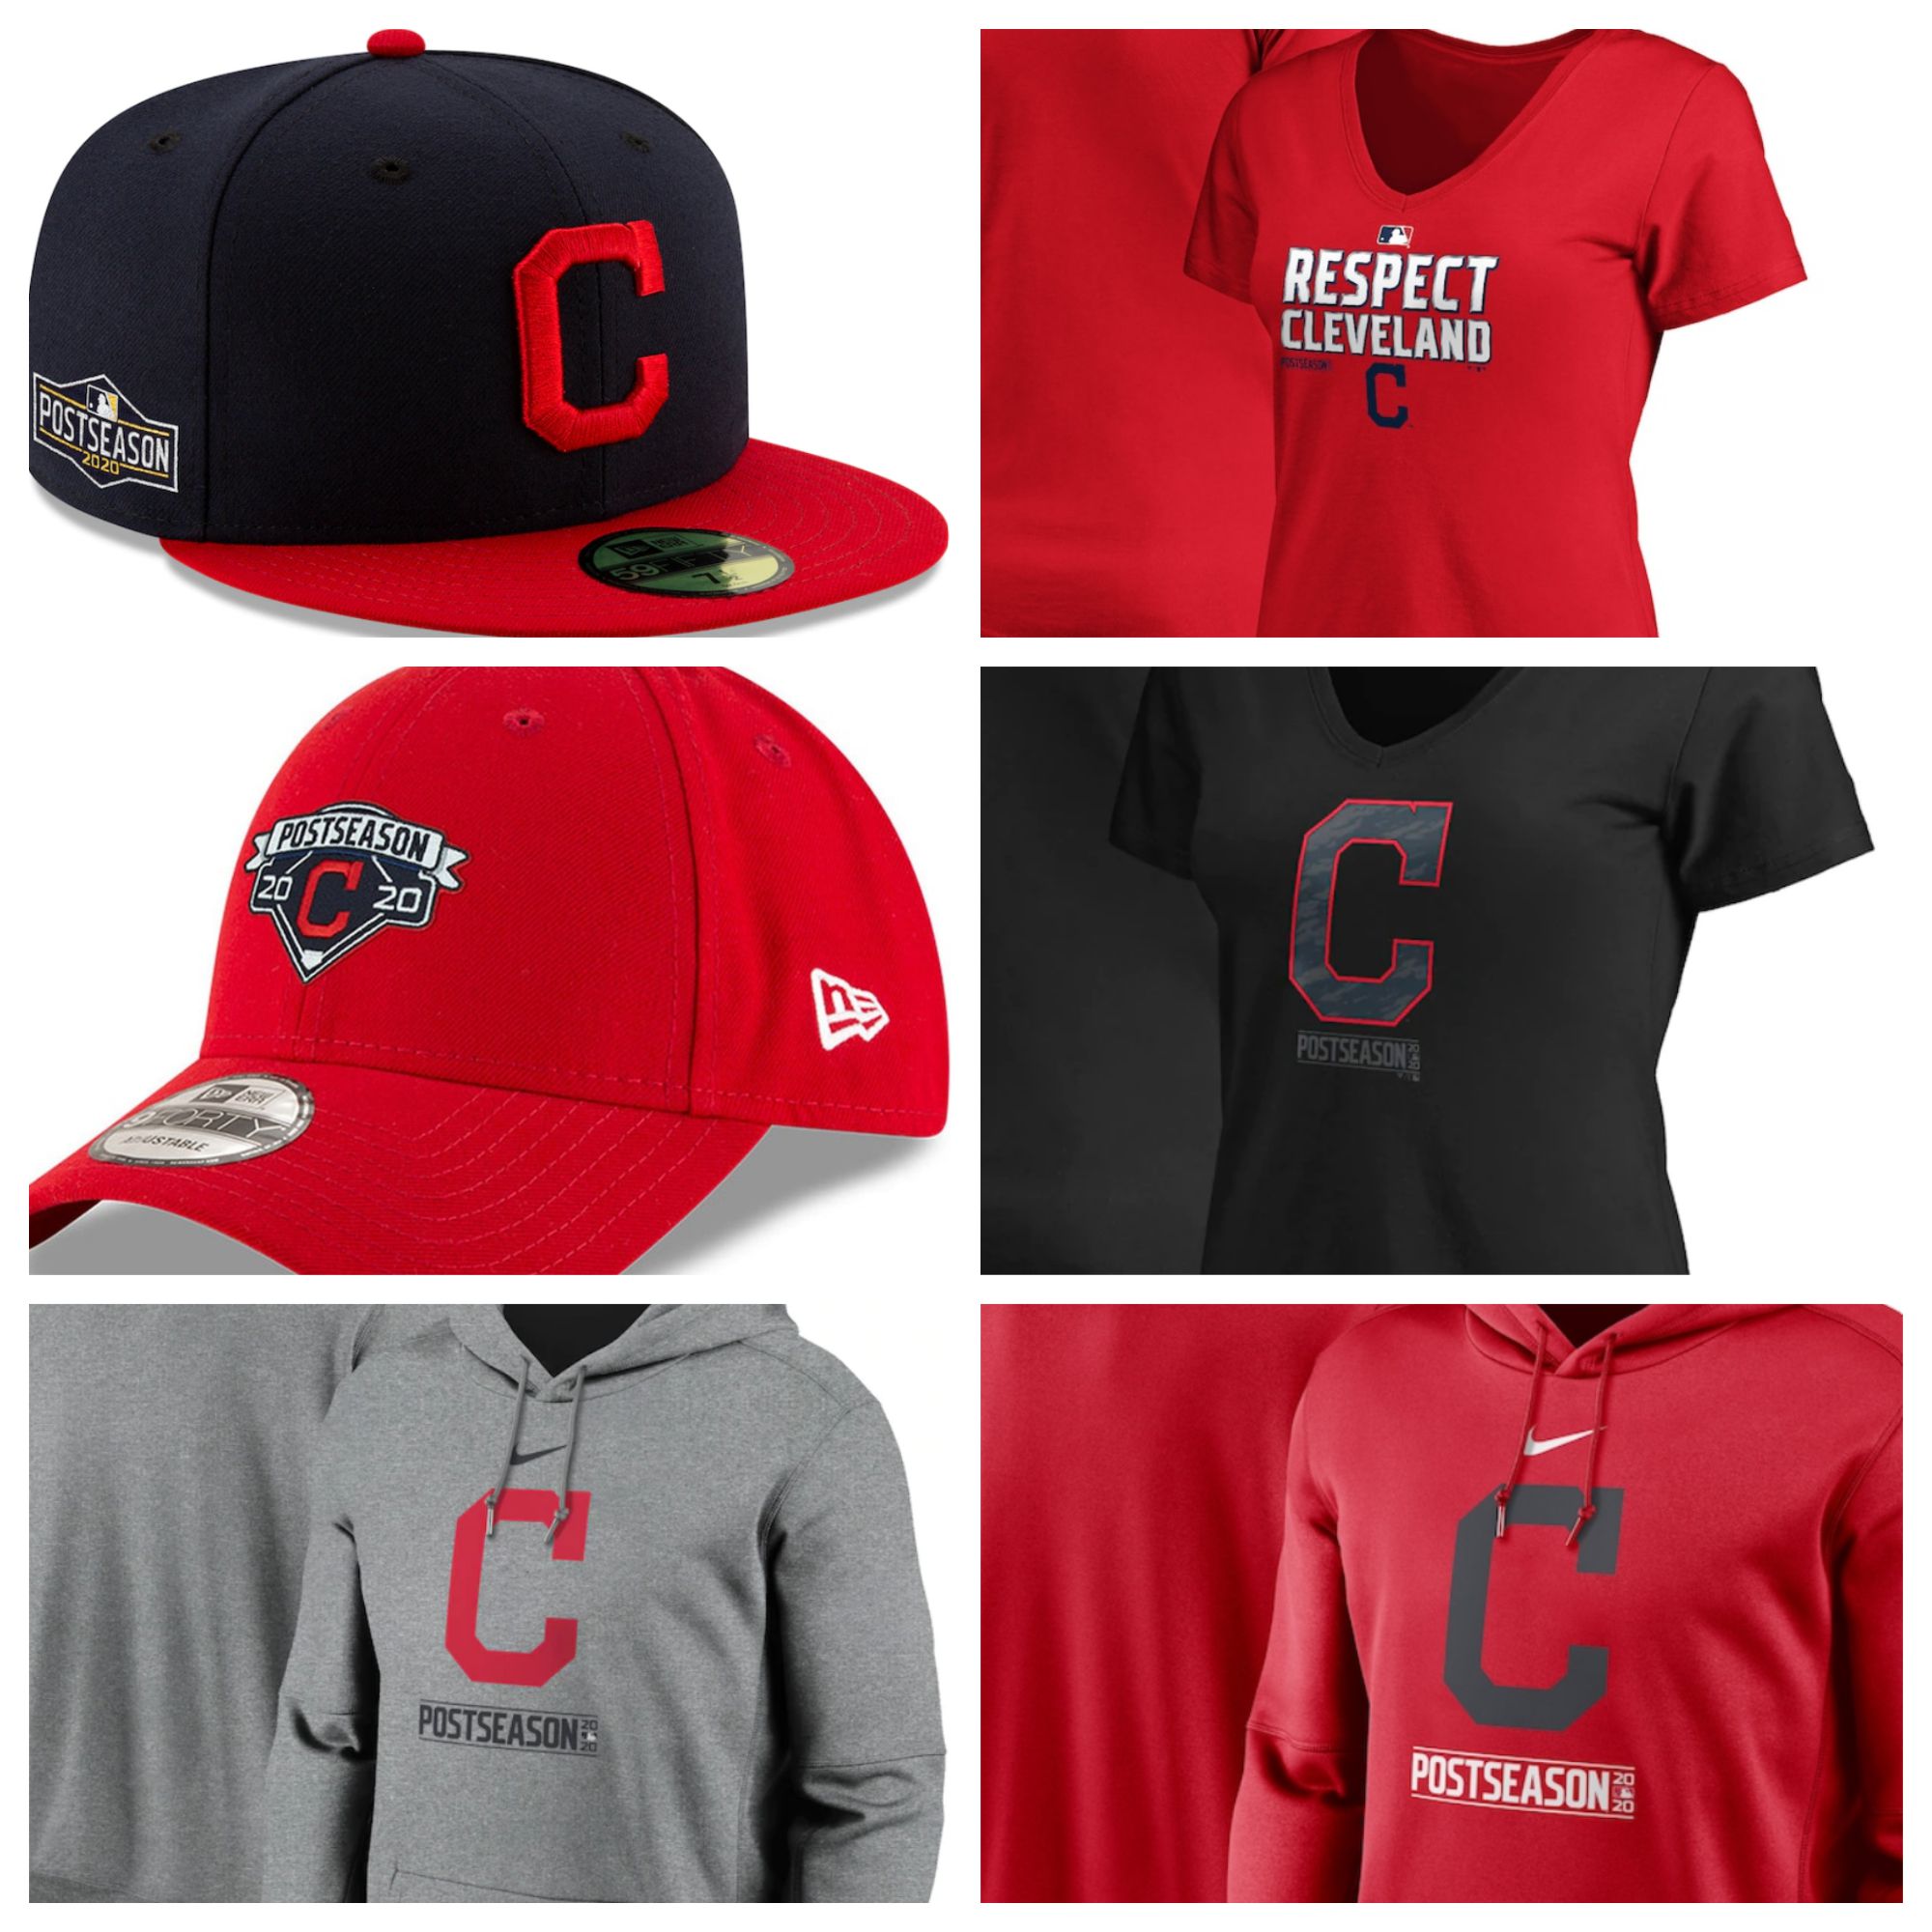 Cleveland Indians 2020 postseason apparel on sale as season winds down 